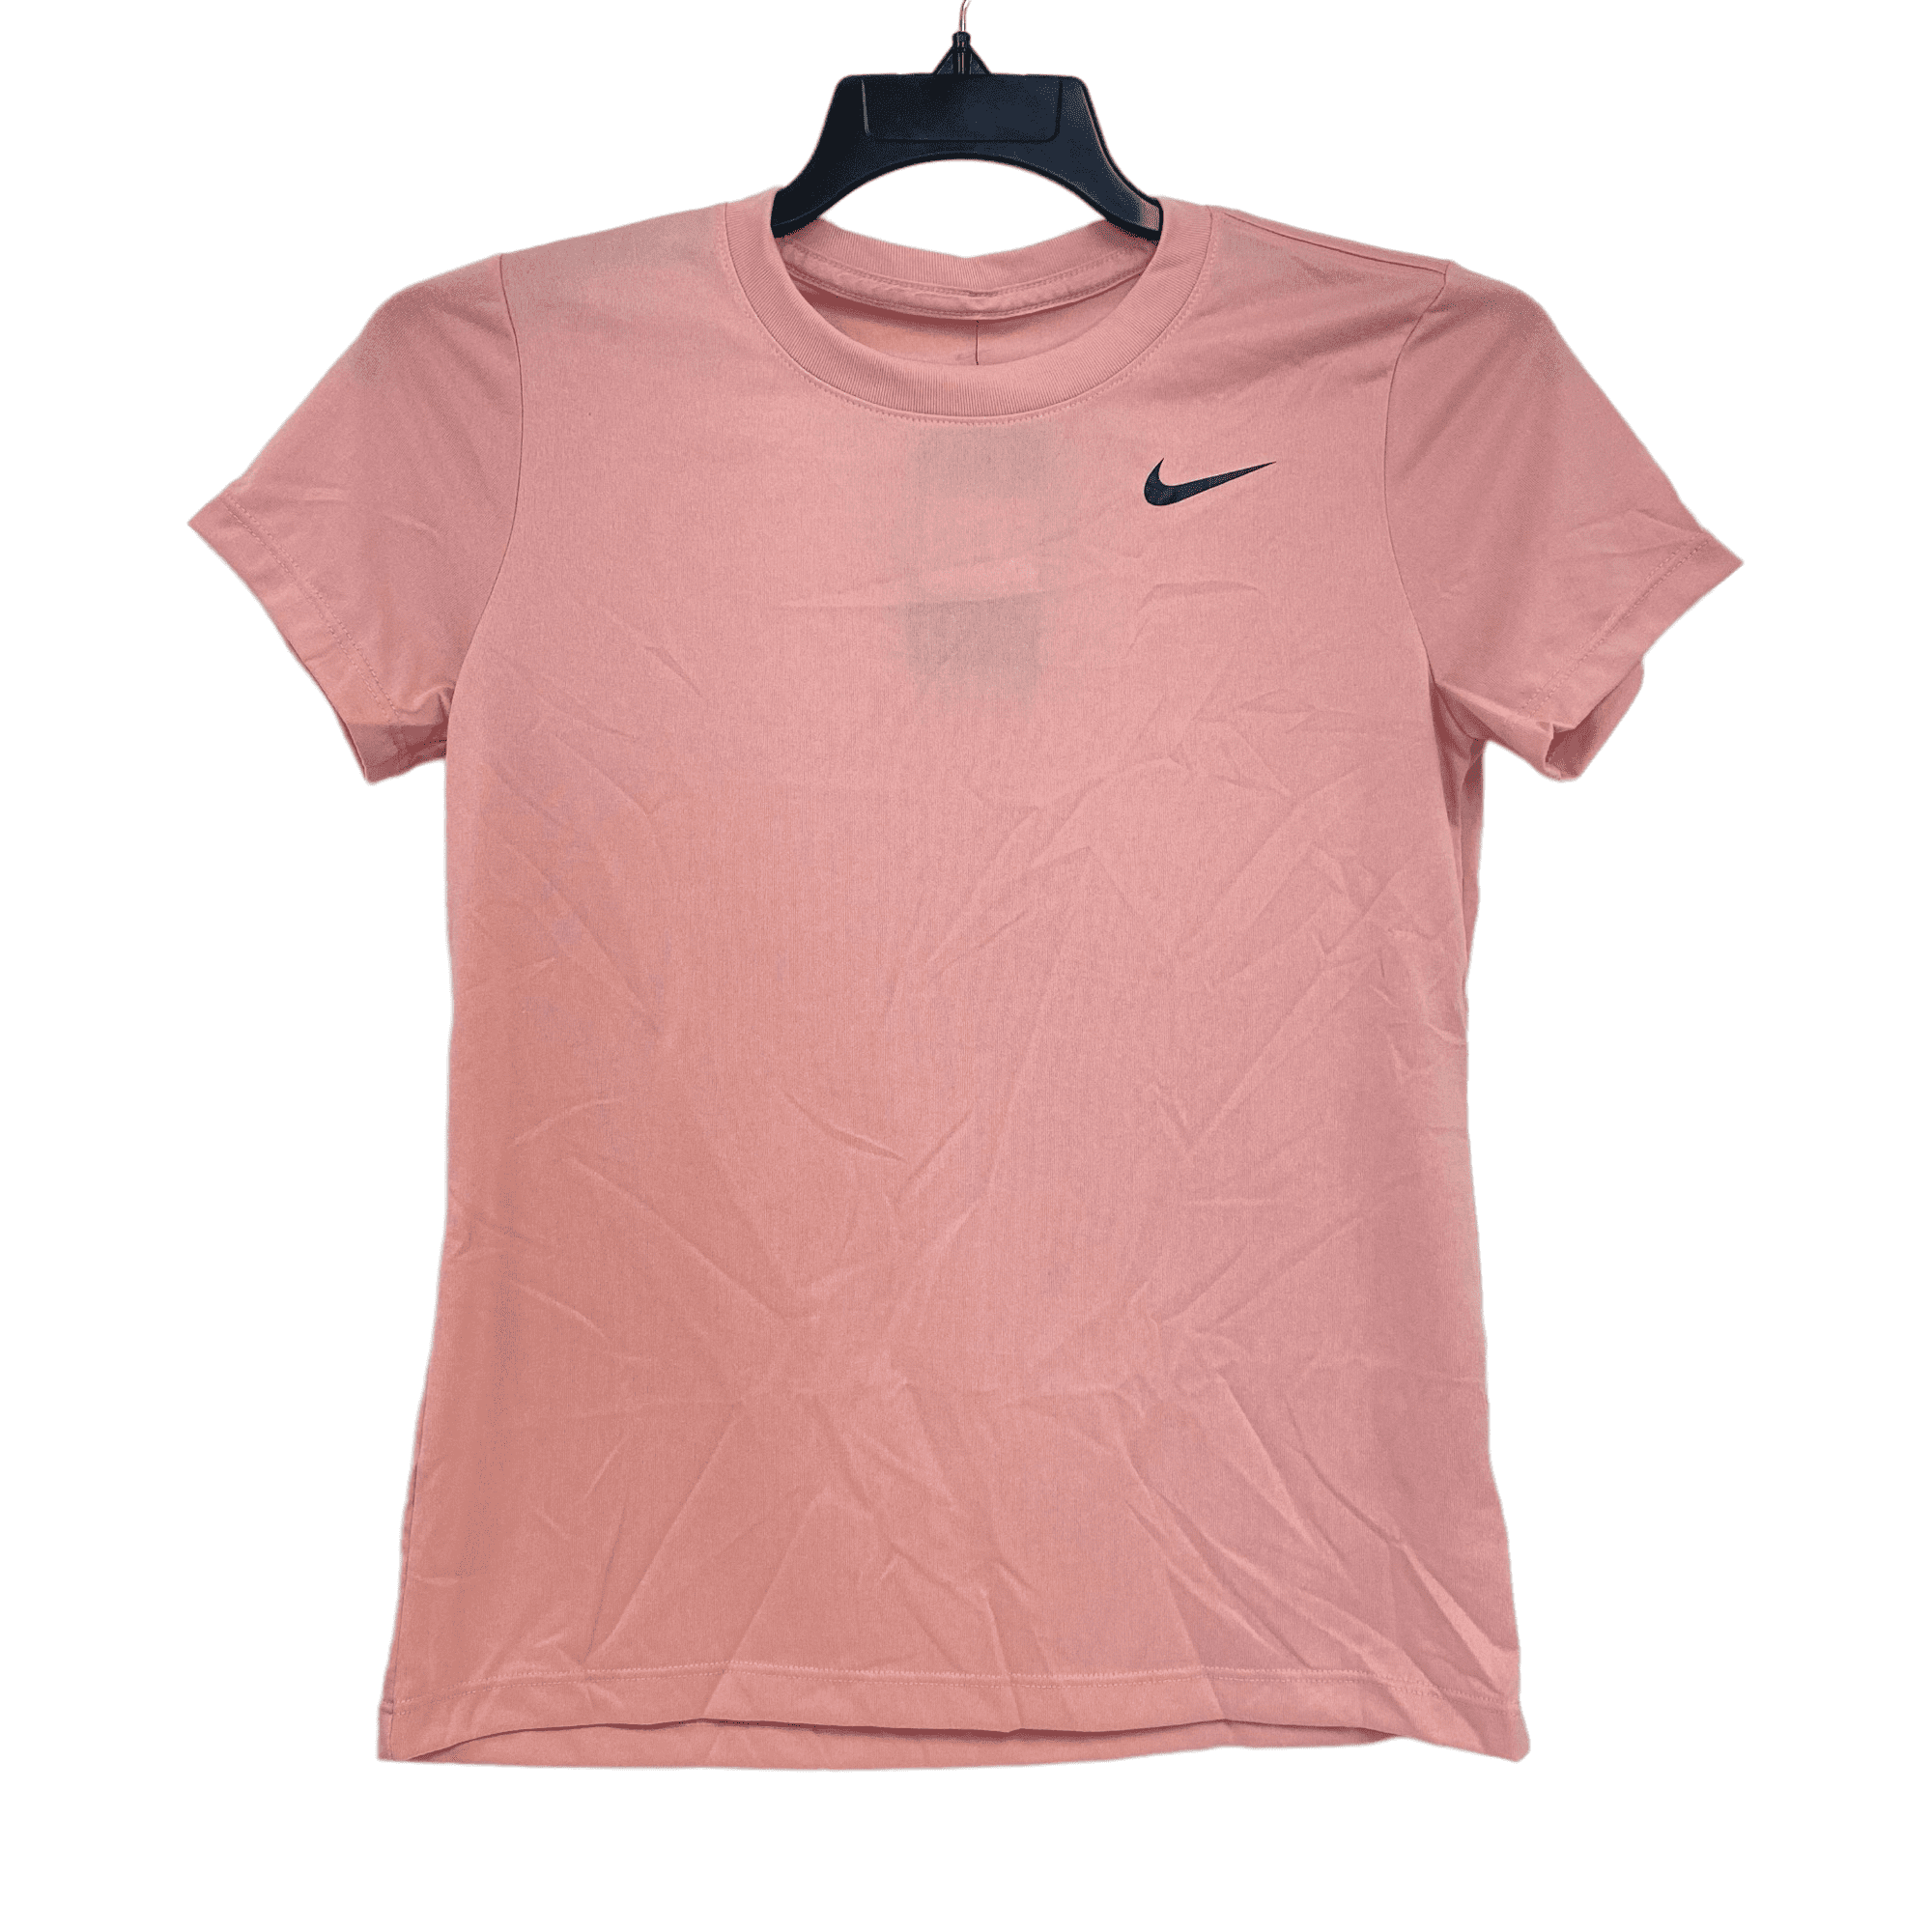 Nike Women's Dry Legend Shirt